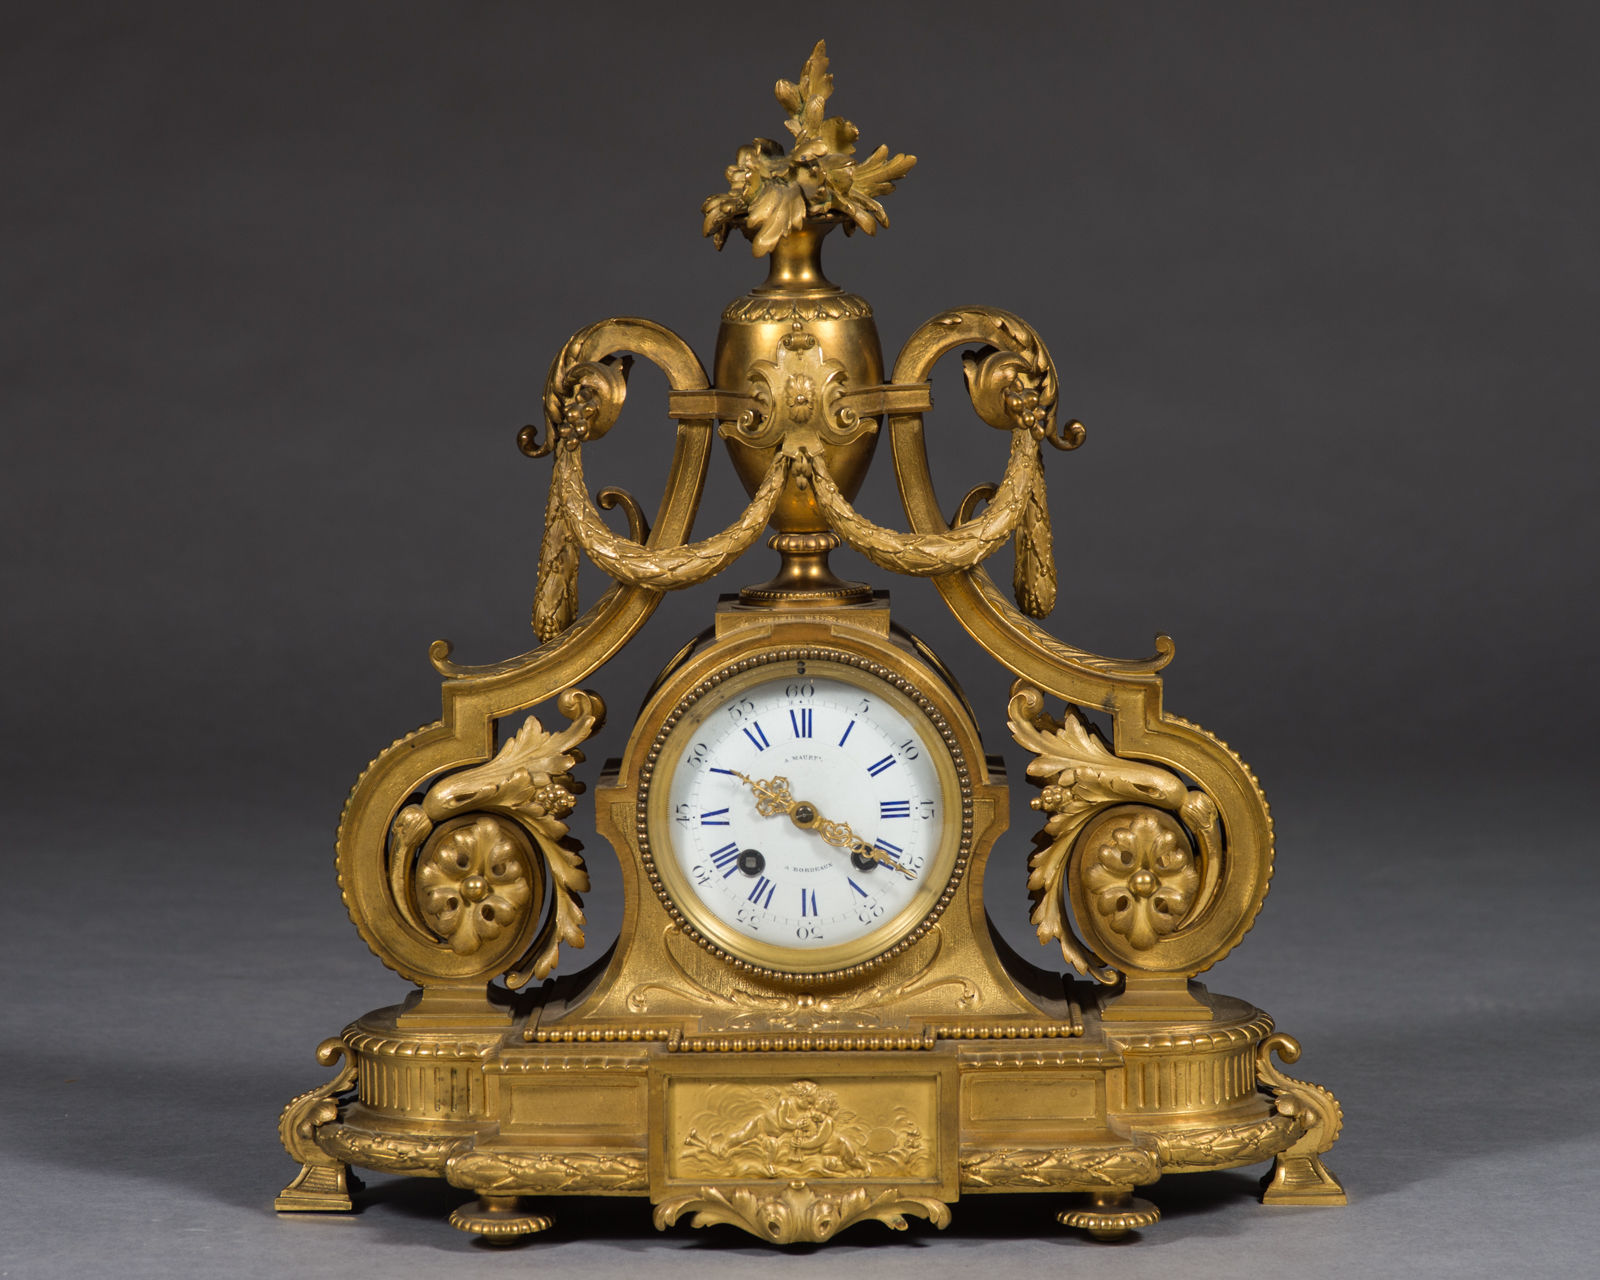 A Fine 19th Century French Gilt Bronze Louis XV Style Mantel Clock by Bordeaux